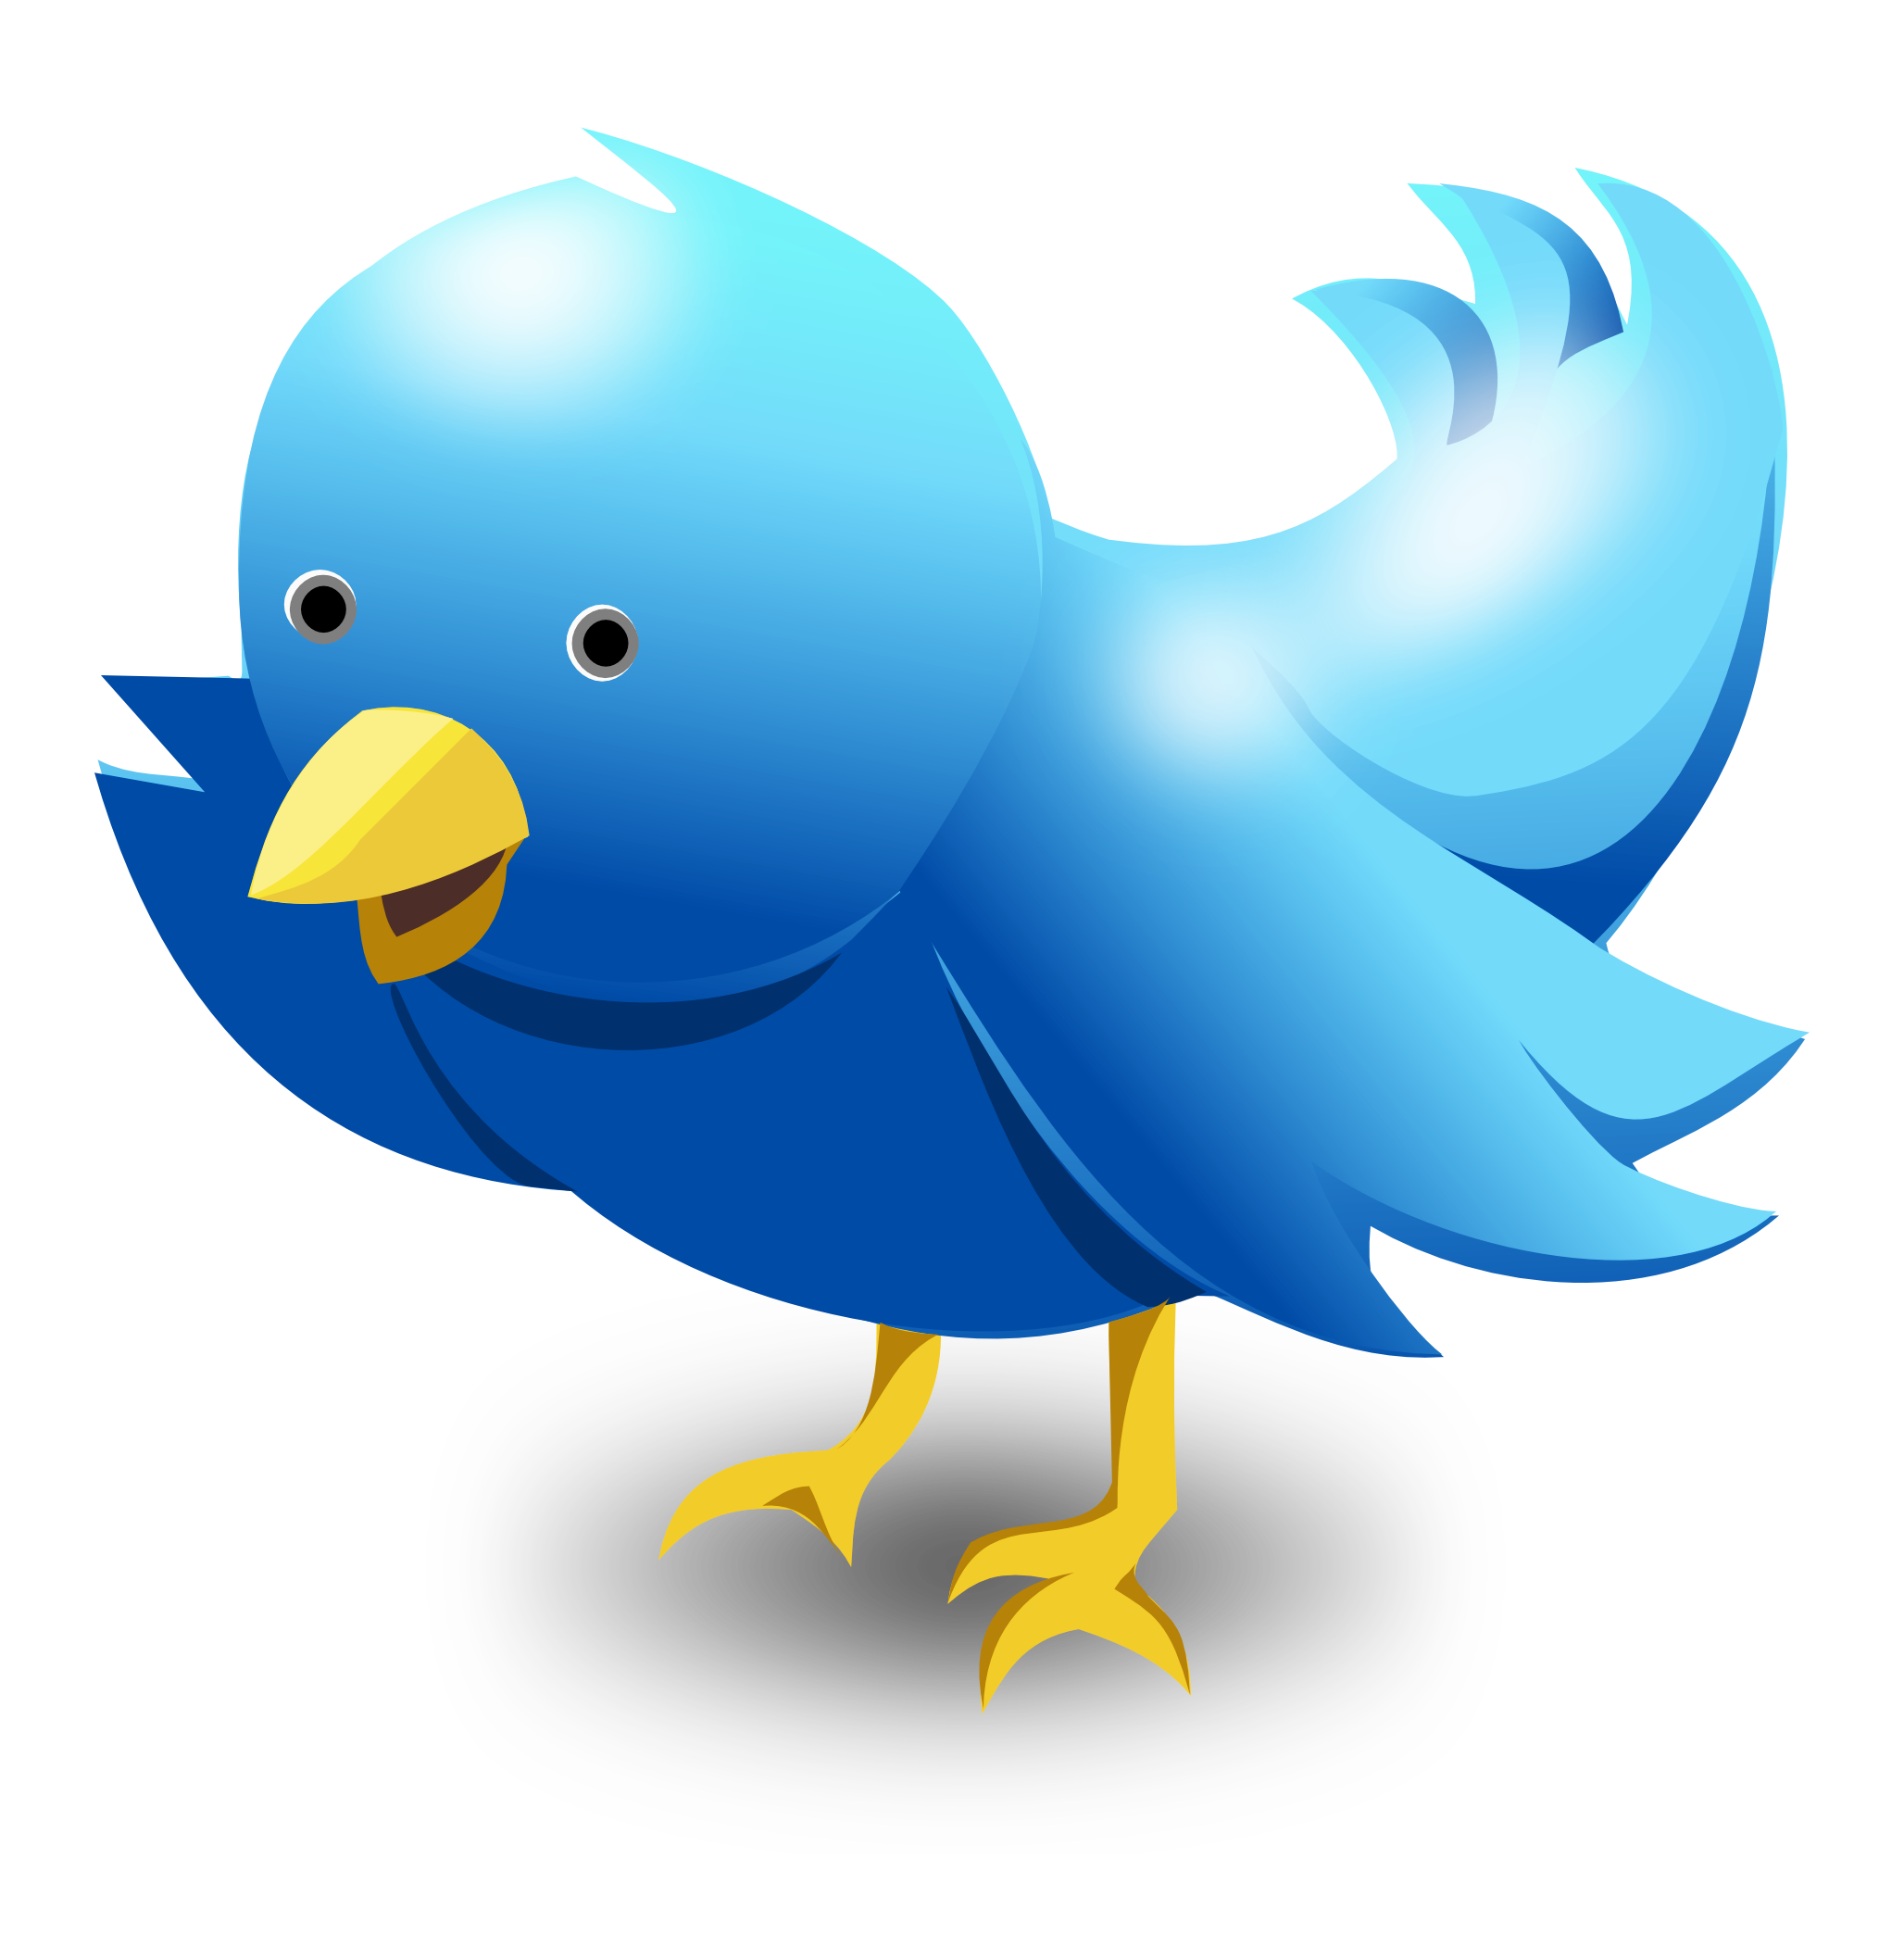 twitter bird vector logo